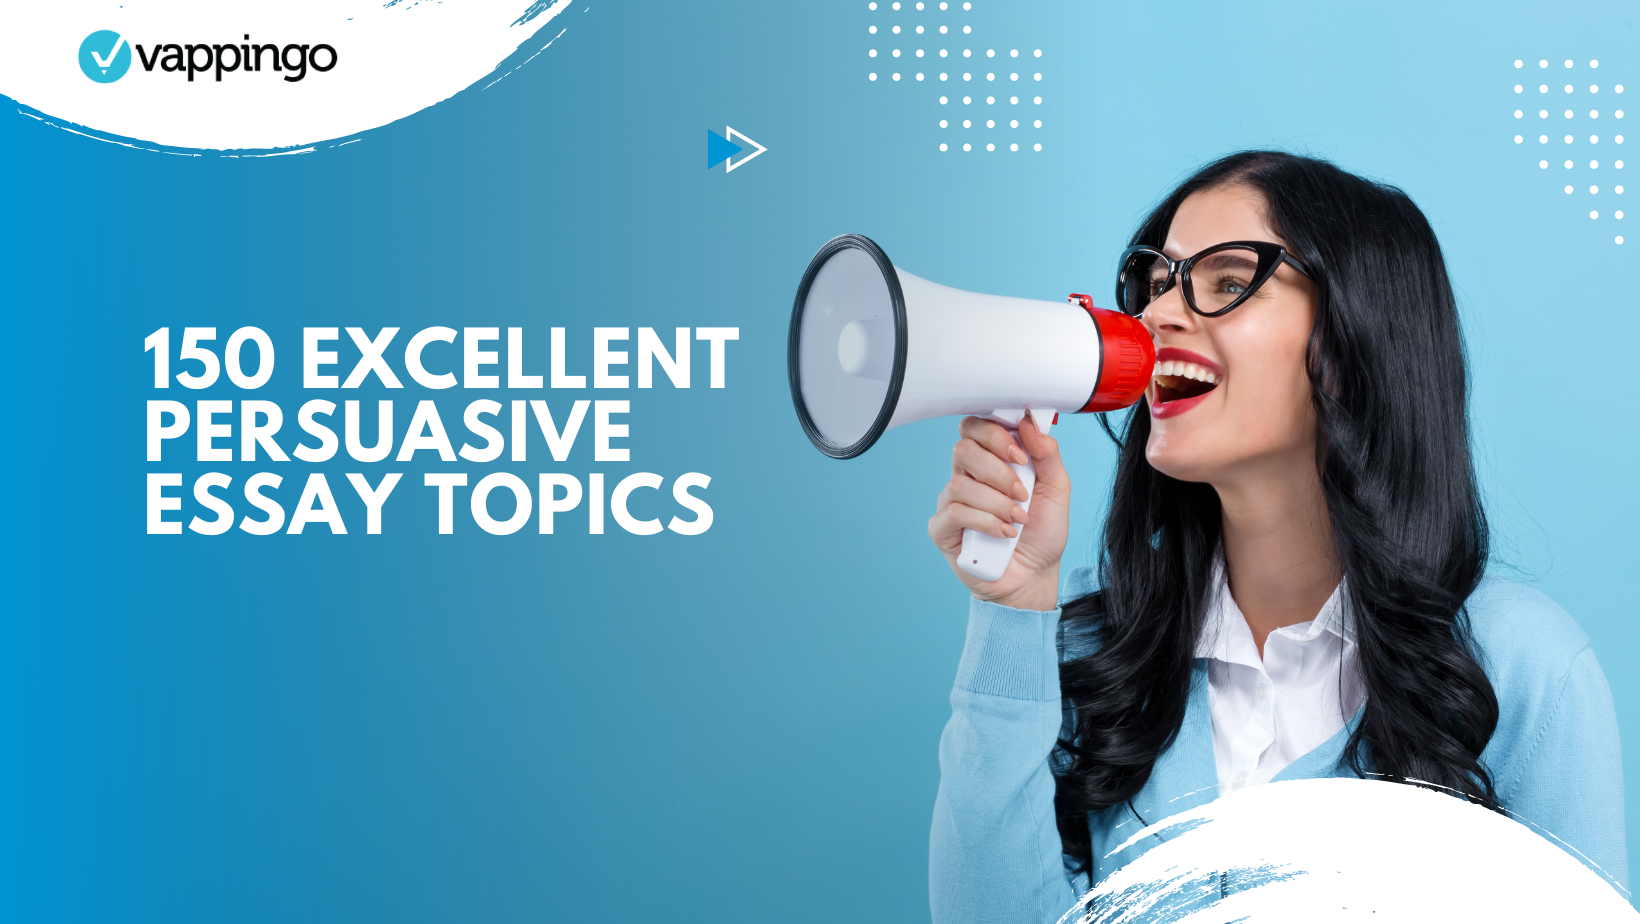 Examples of persuasive essay topics banner